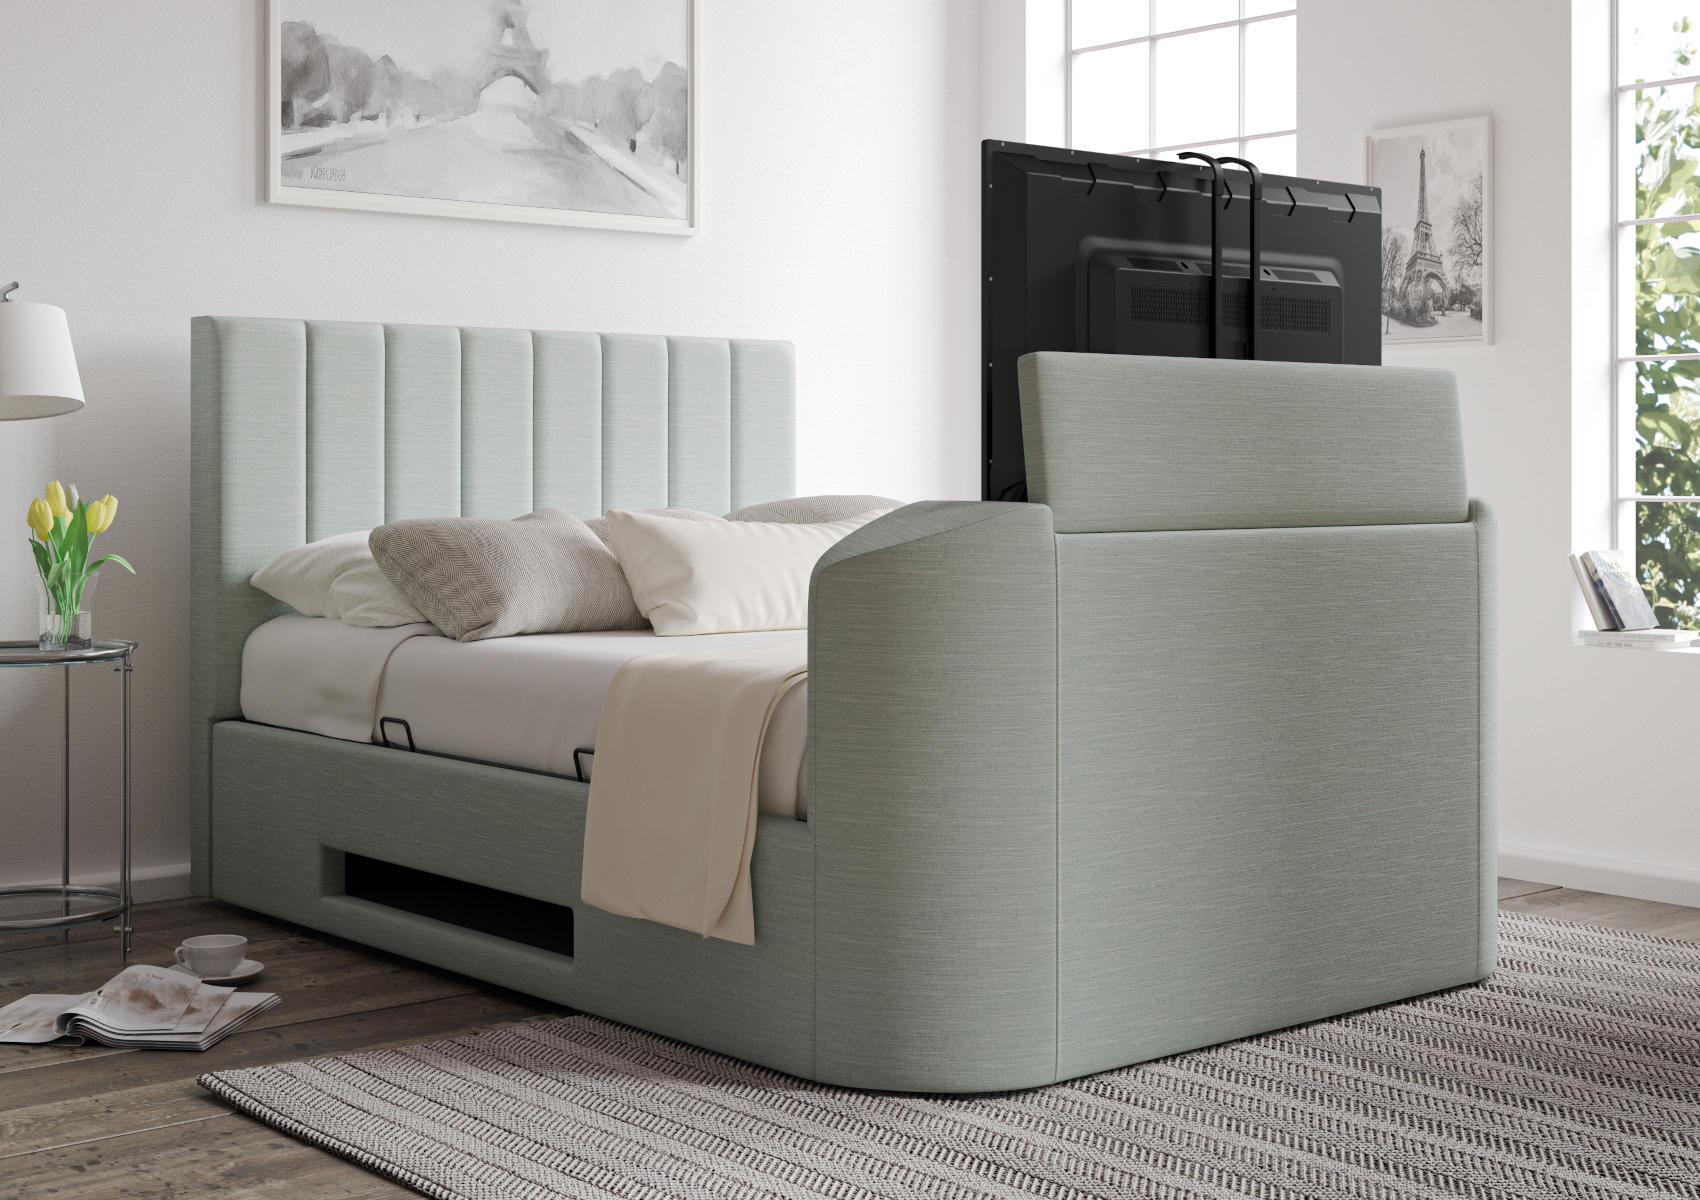 View Berkley Linea SeaBlue Upholstered King Size Multifunctional Ottoman Smart TV Bed Time4Sleep information